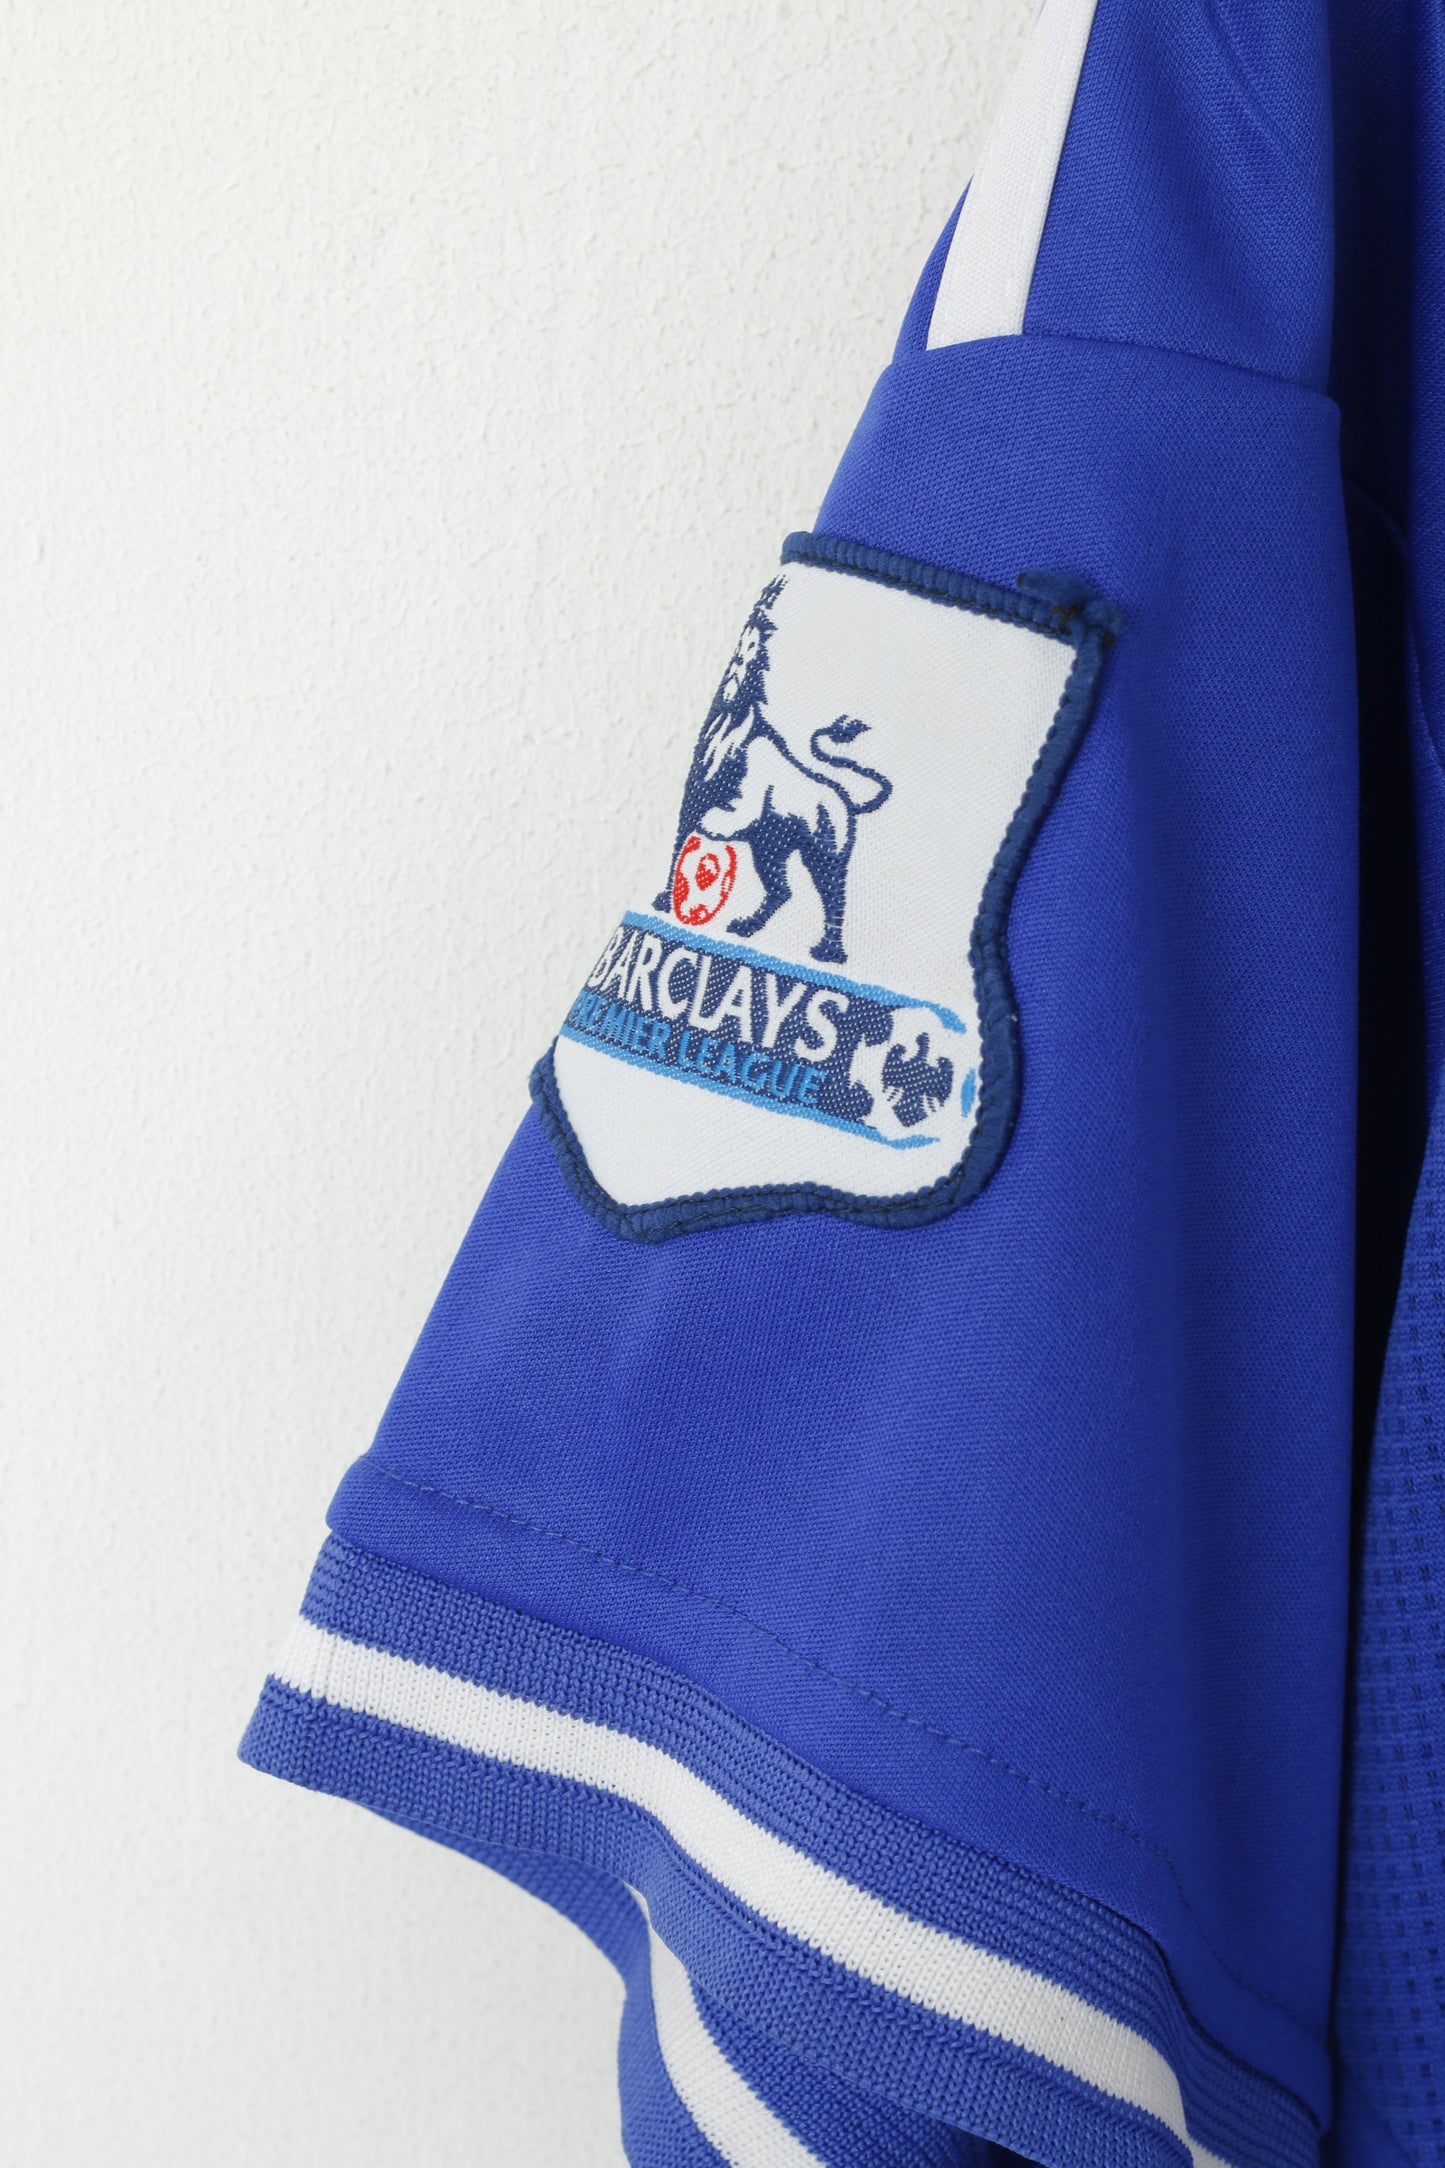 Maglia Adidas da uomo L blu vintage Chelsea Football Club Jersey Torres #9 Top